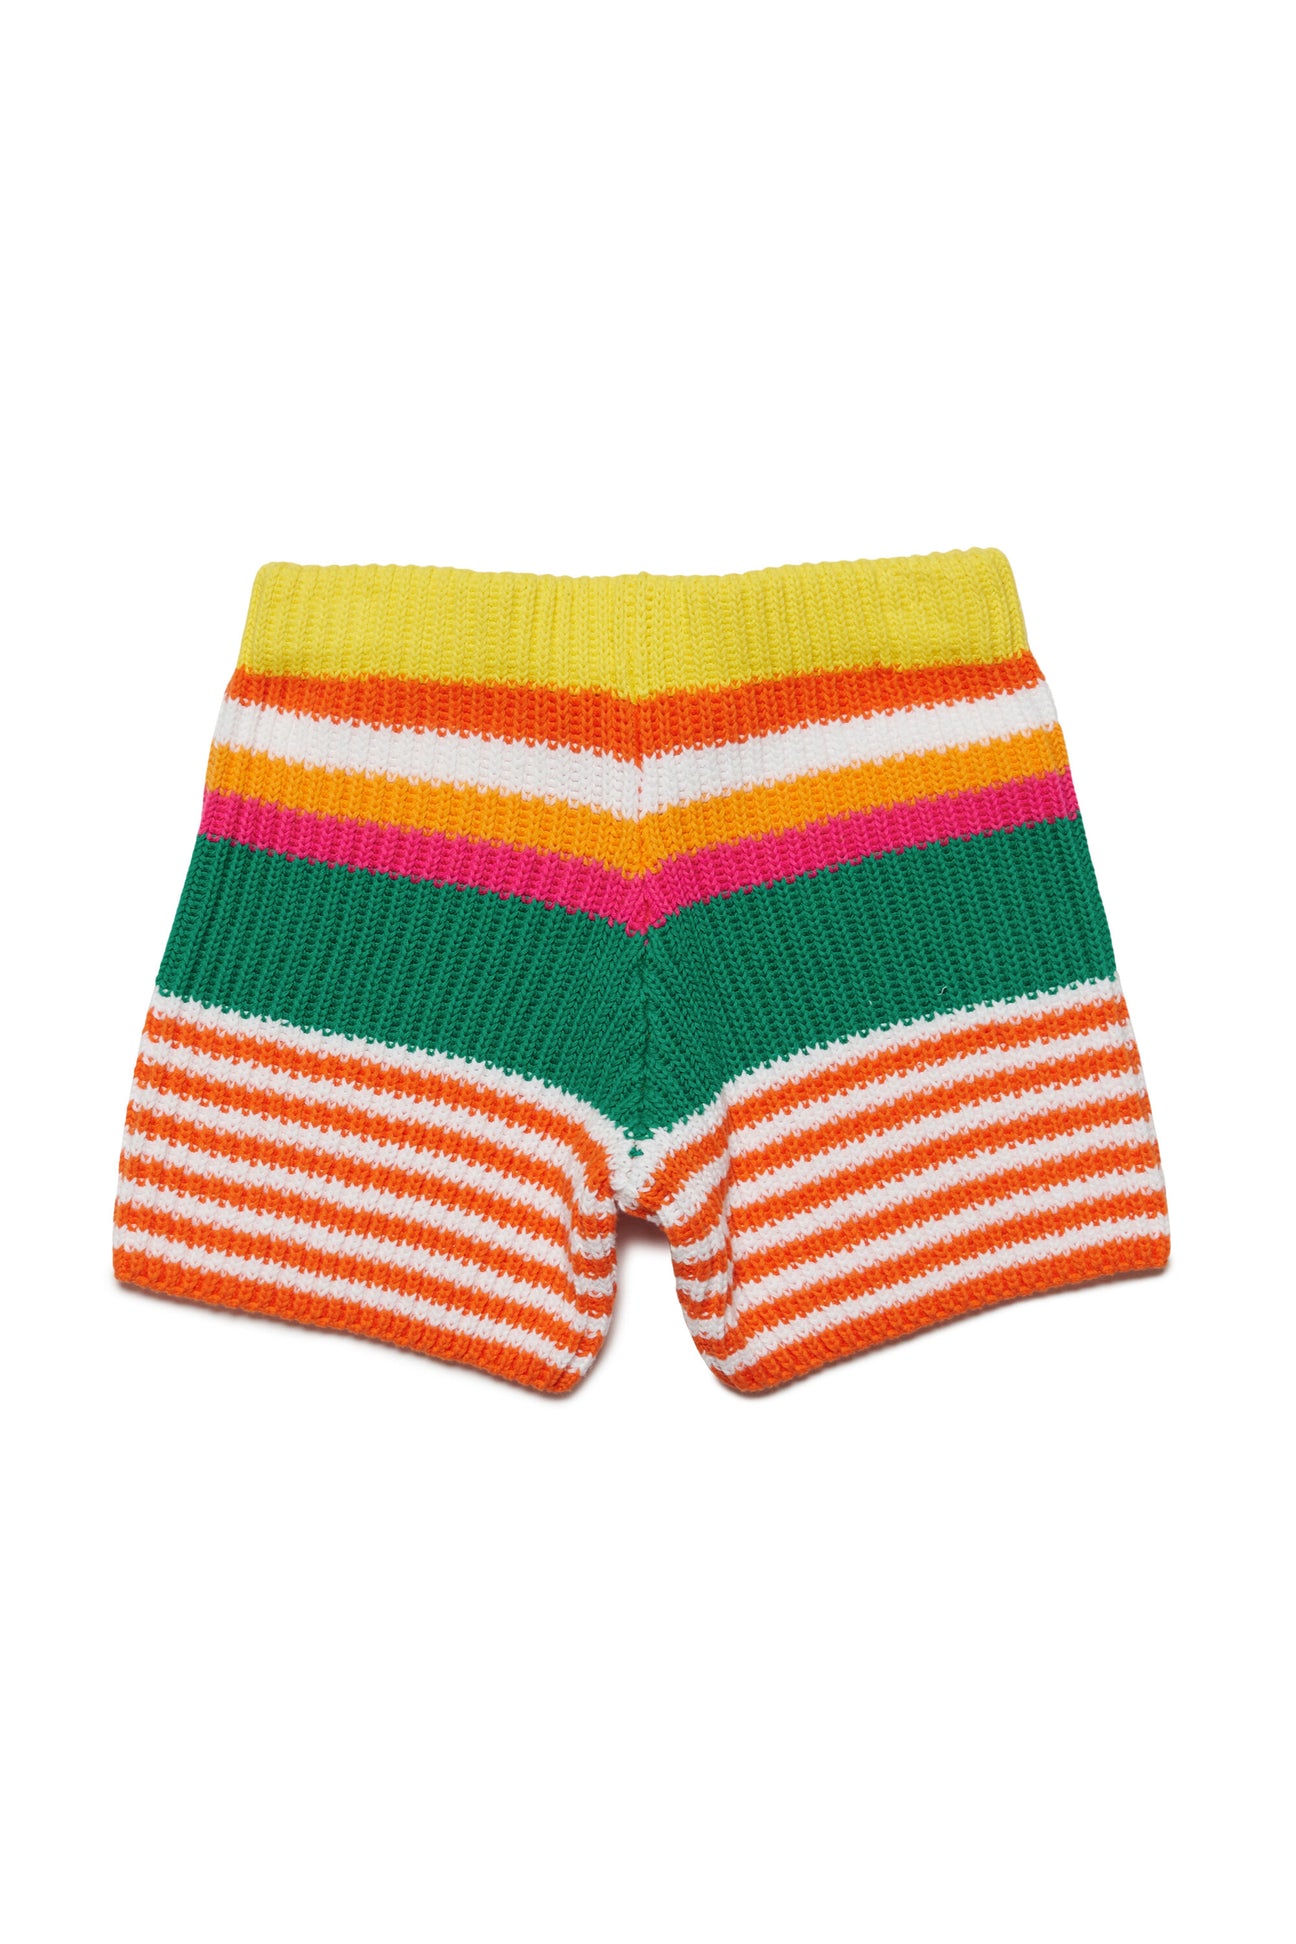 English striped knit shorts English striped knit shorts